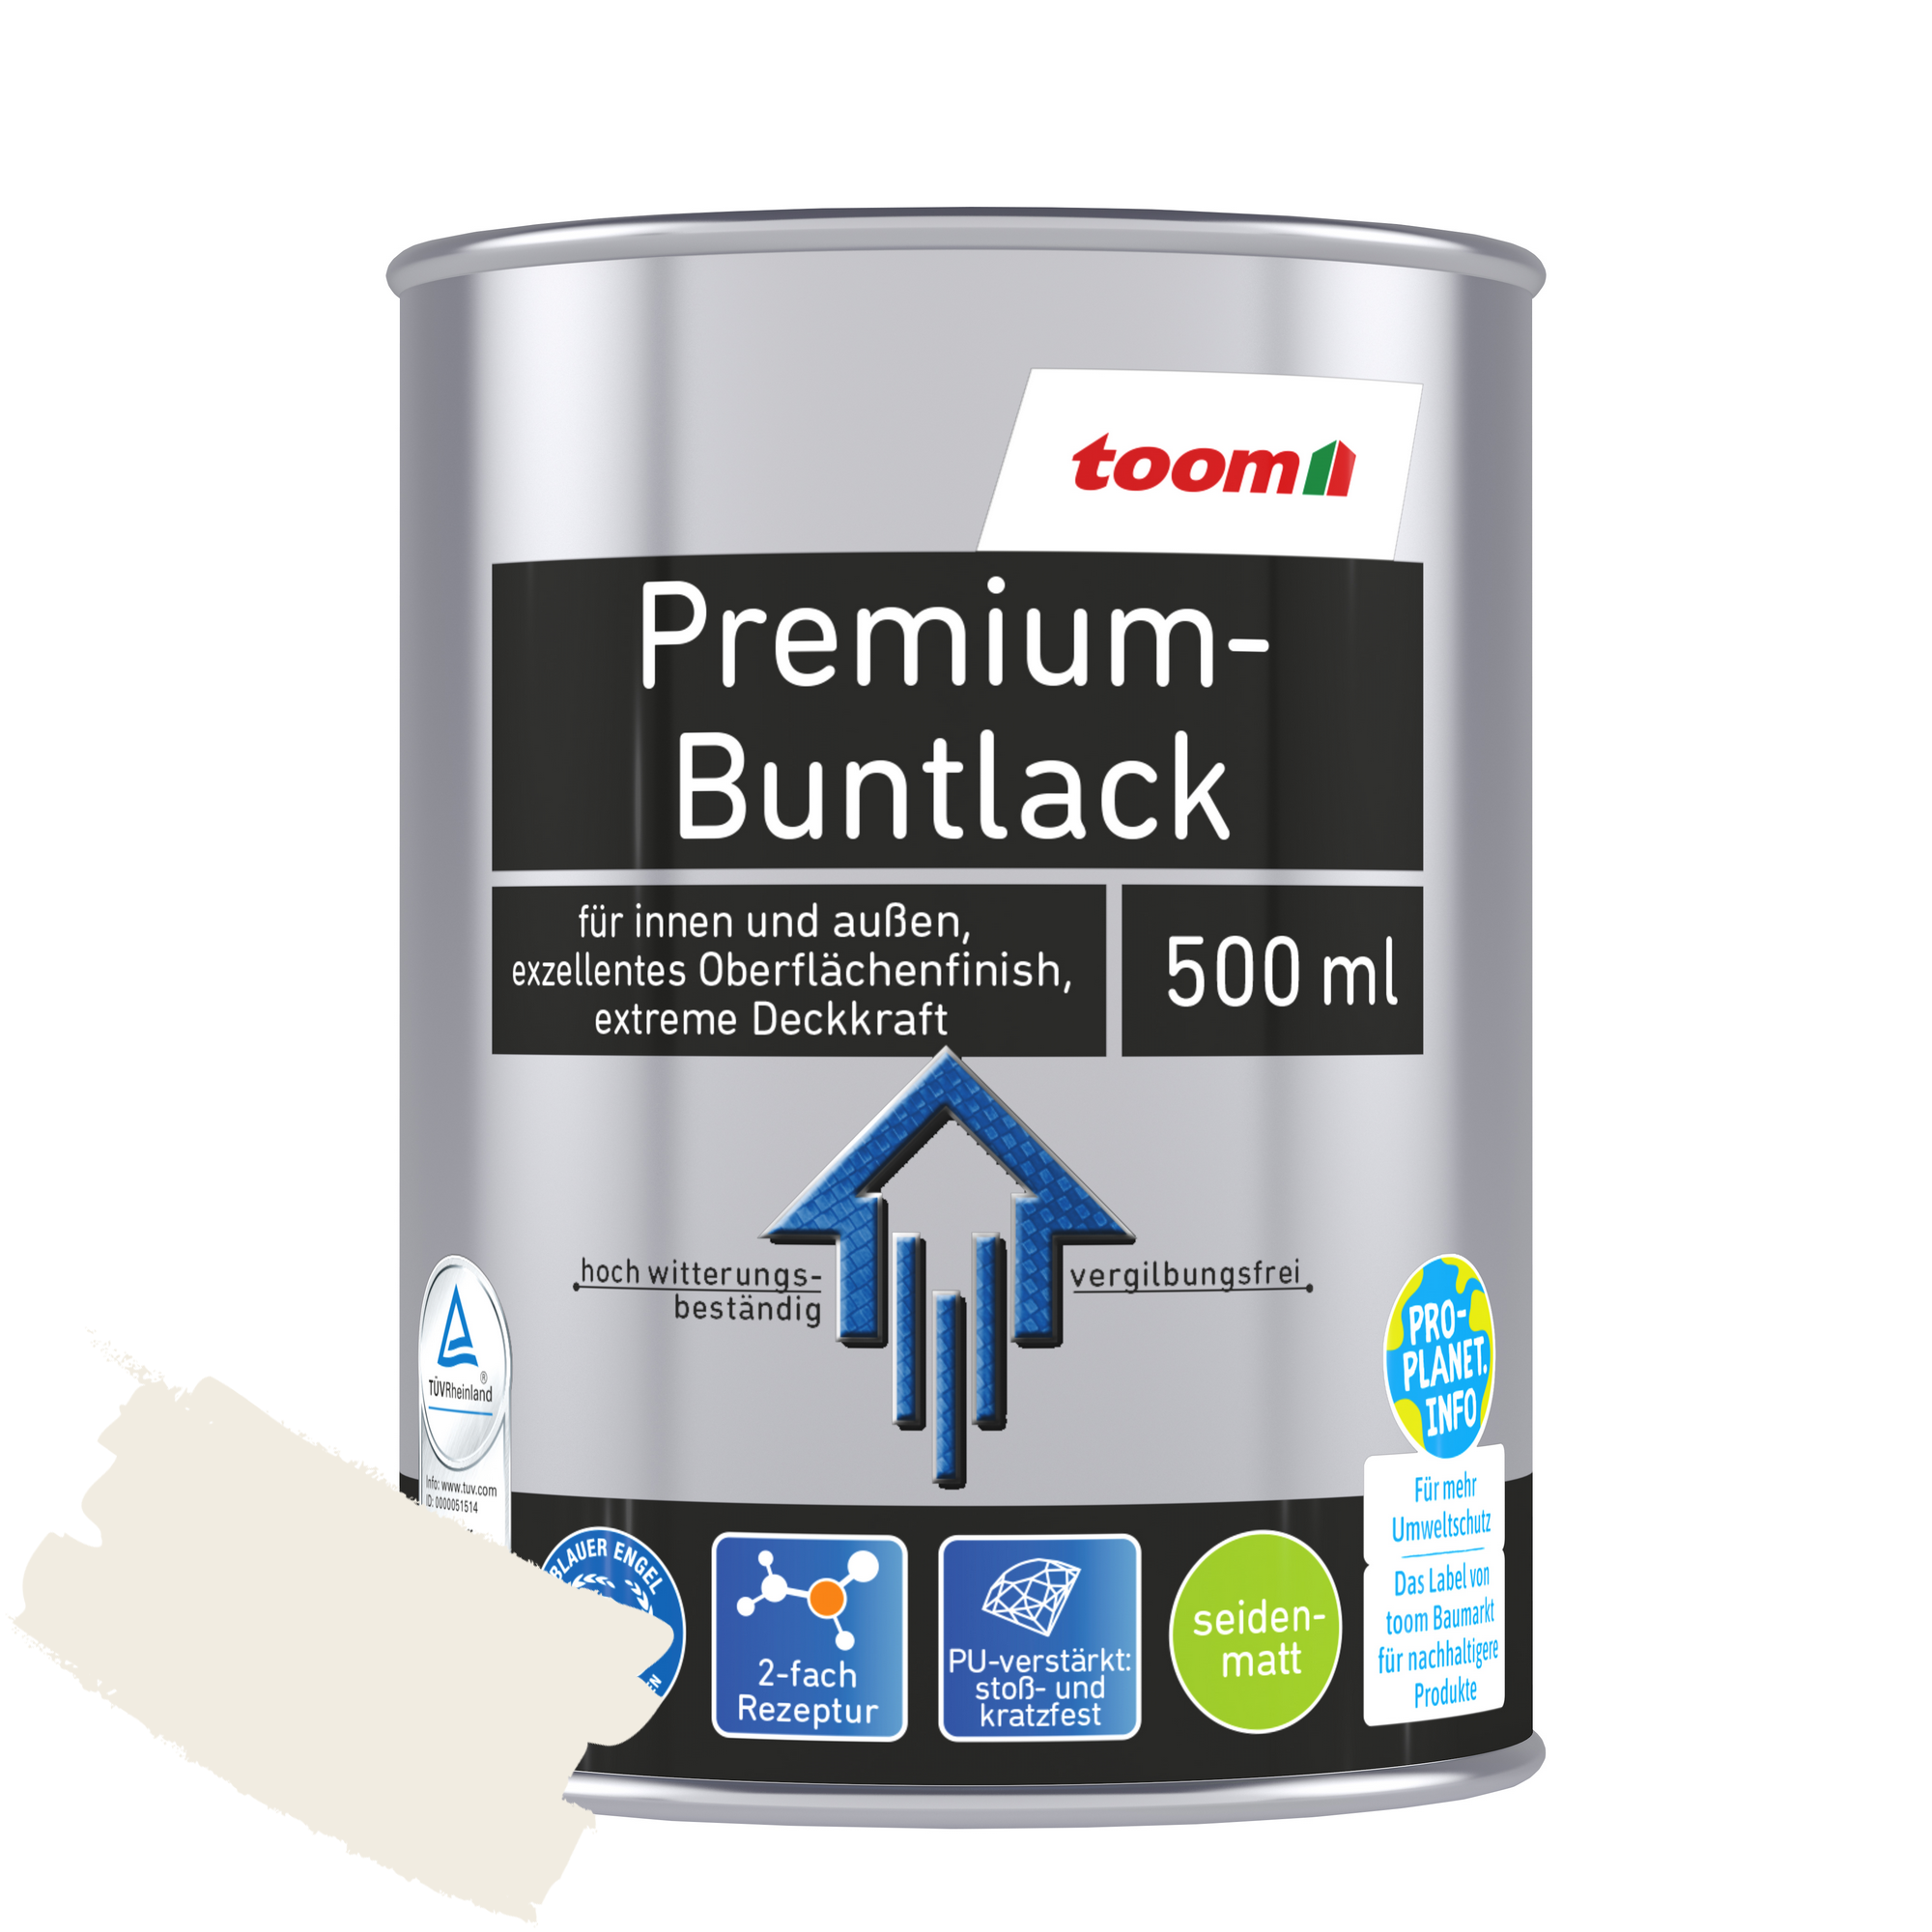 Premium-Buntlack 'Bergkristall' cremeweiß seidenmatt 500 ml + product picture